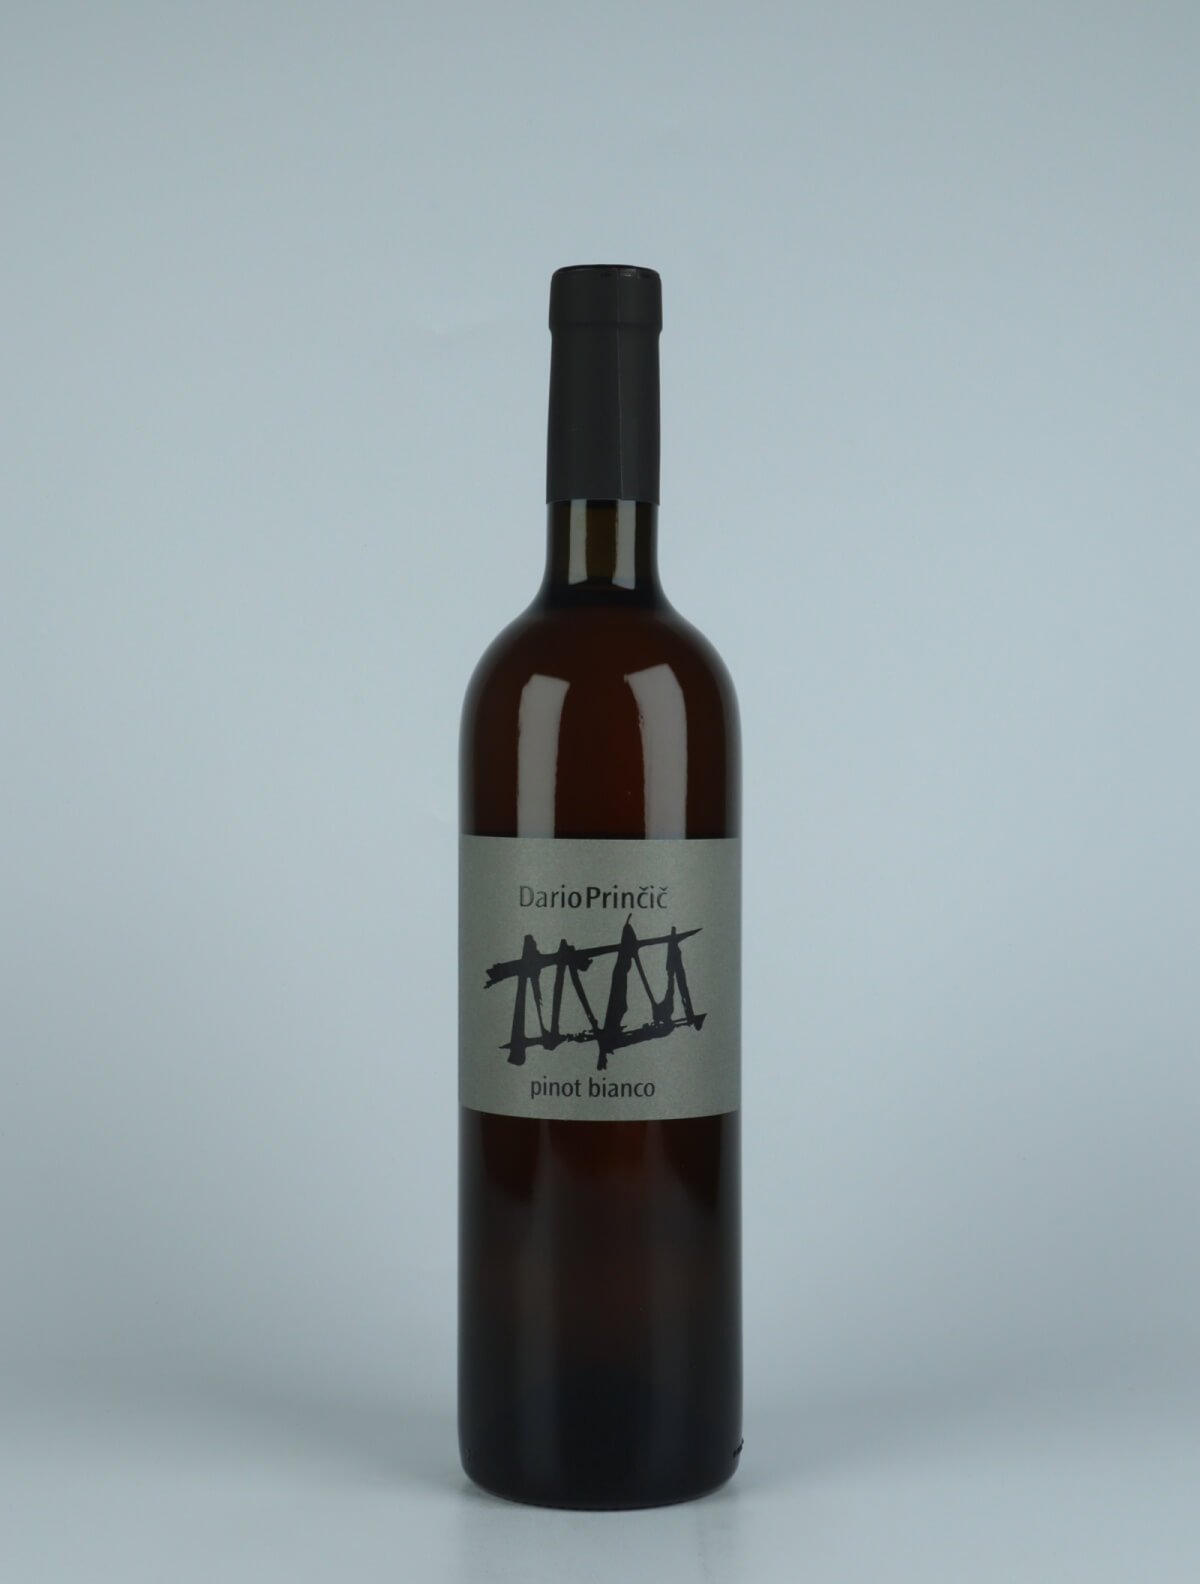 A bottle 2019 Pinot Bianco Orange wine from Dario Princic, Friuli in Italy